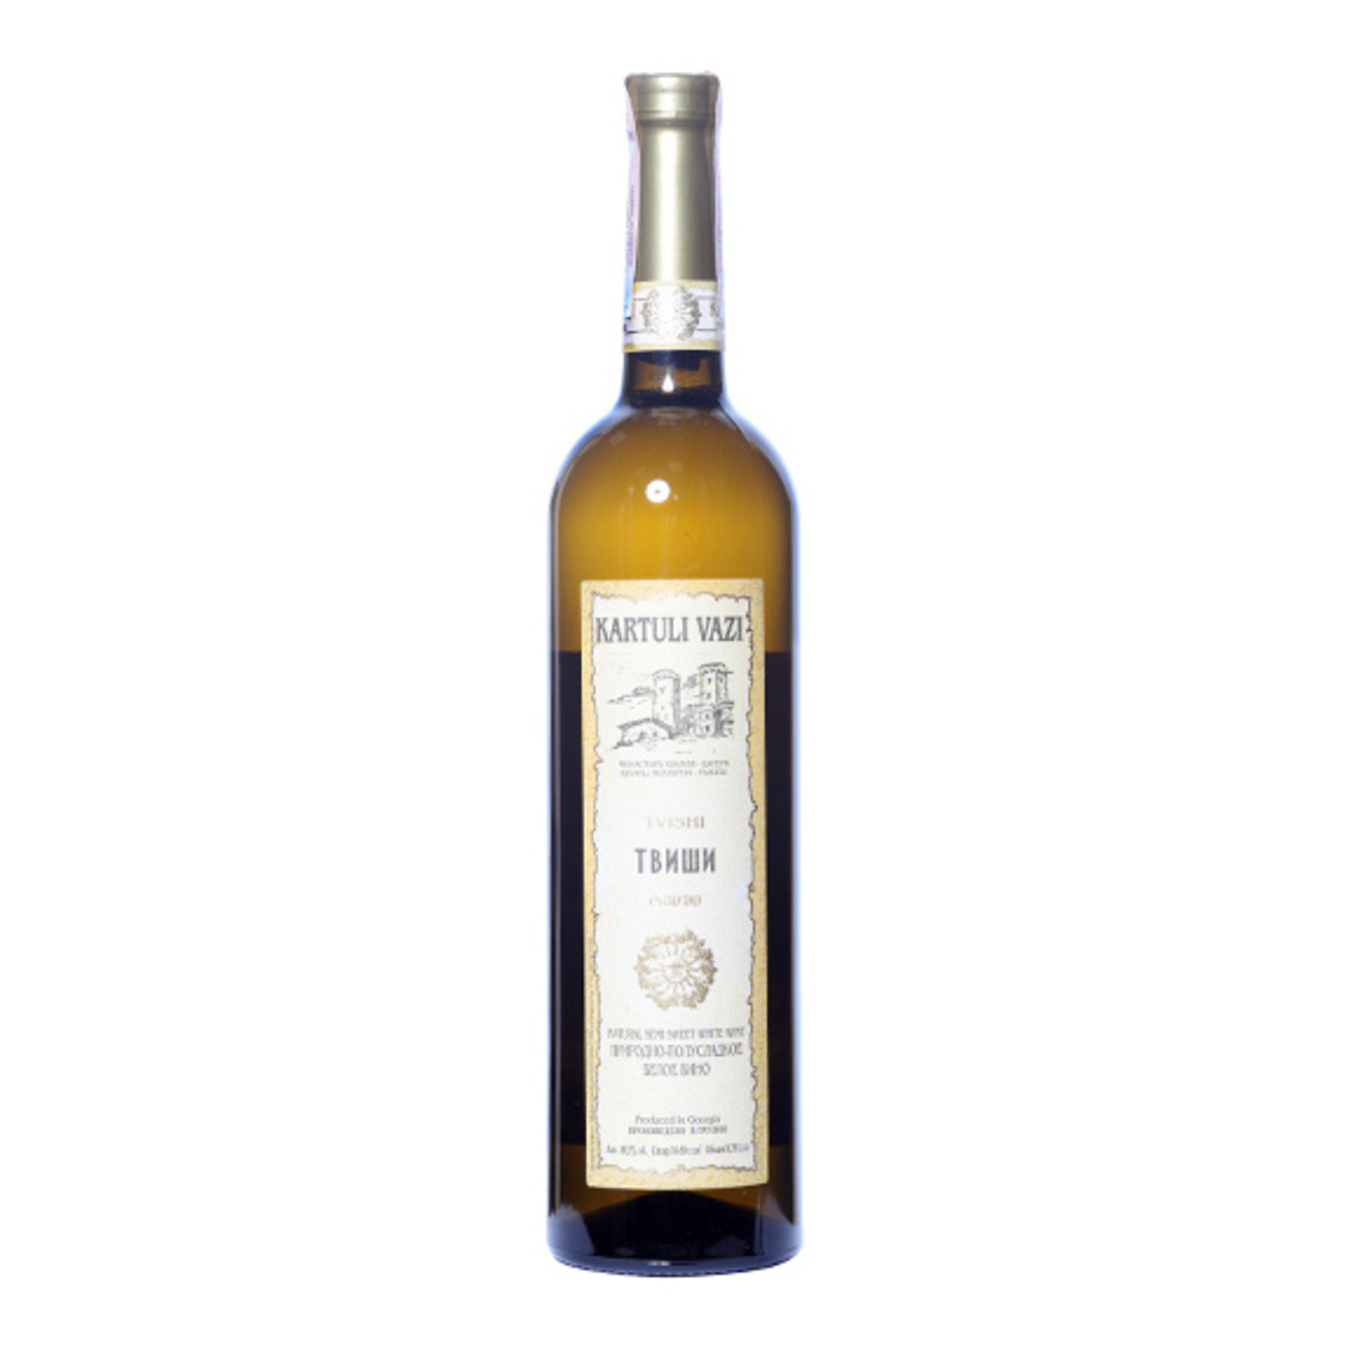 Kartauli Vazi Tvishi white semi-sweet wine 10.5% 0.75l